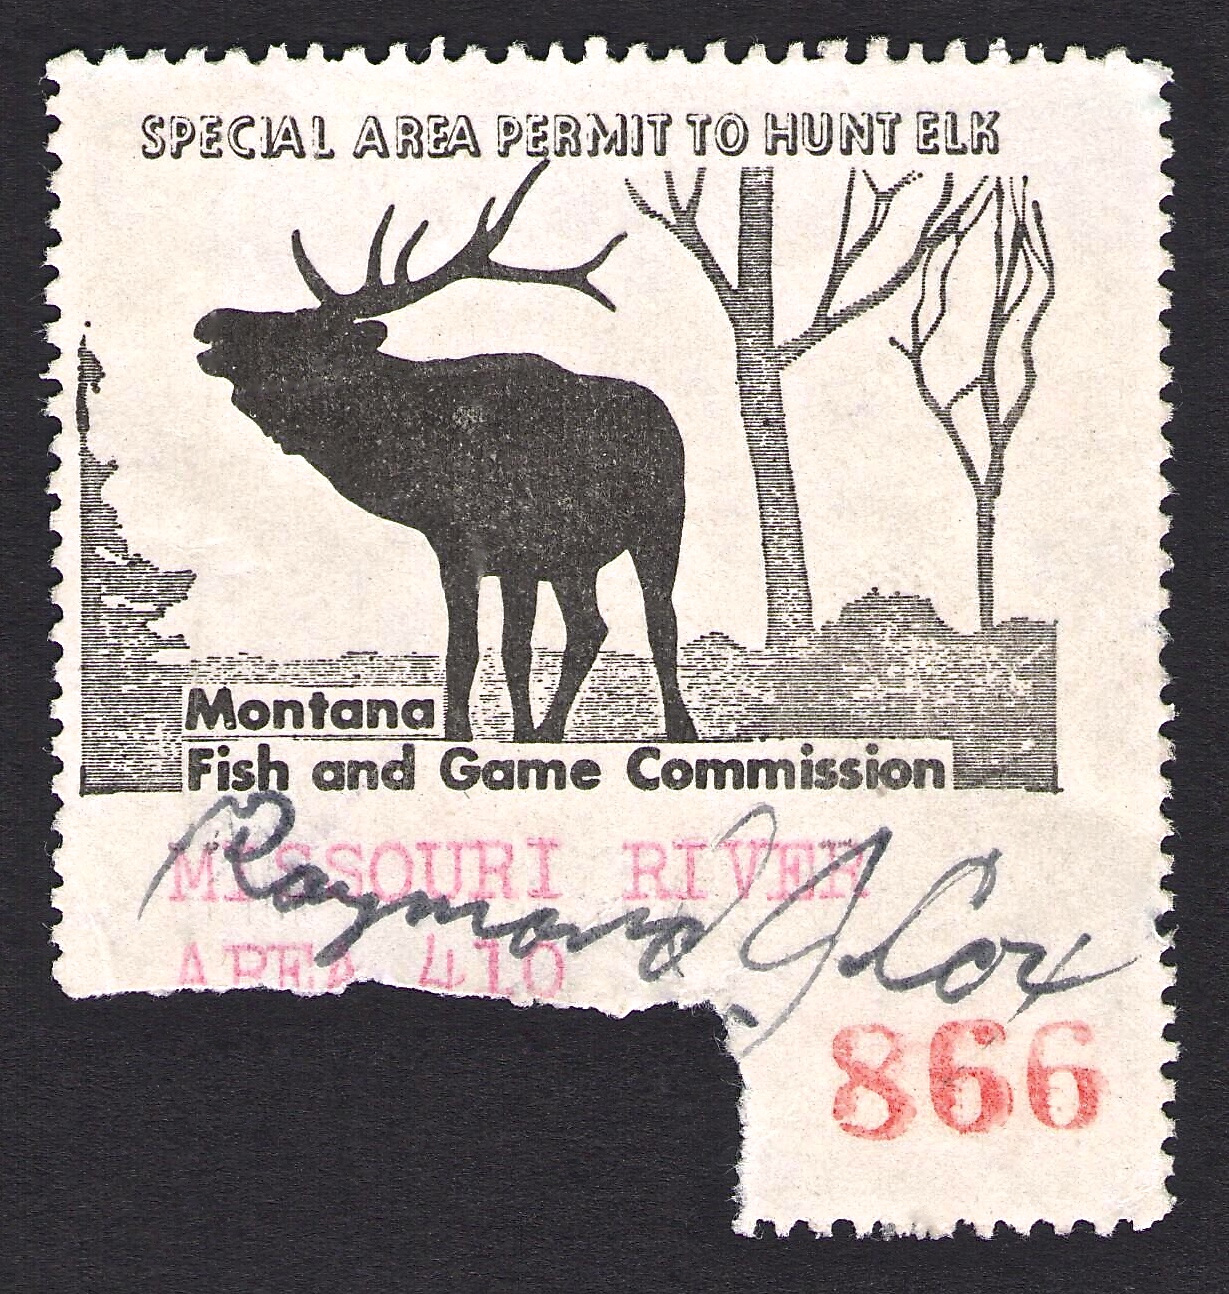 Typed "MISSOURI RIVER AREA 410" Special Area Permit to Hunt Elk